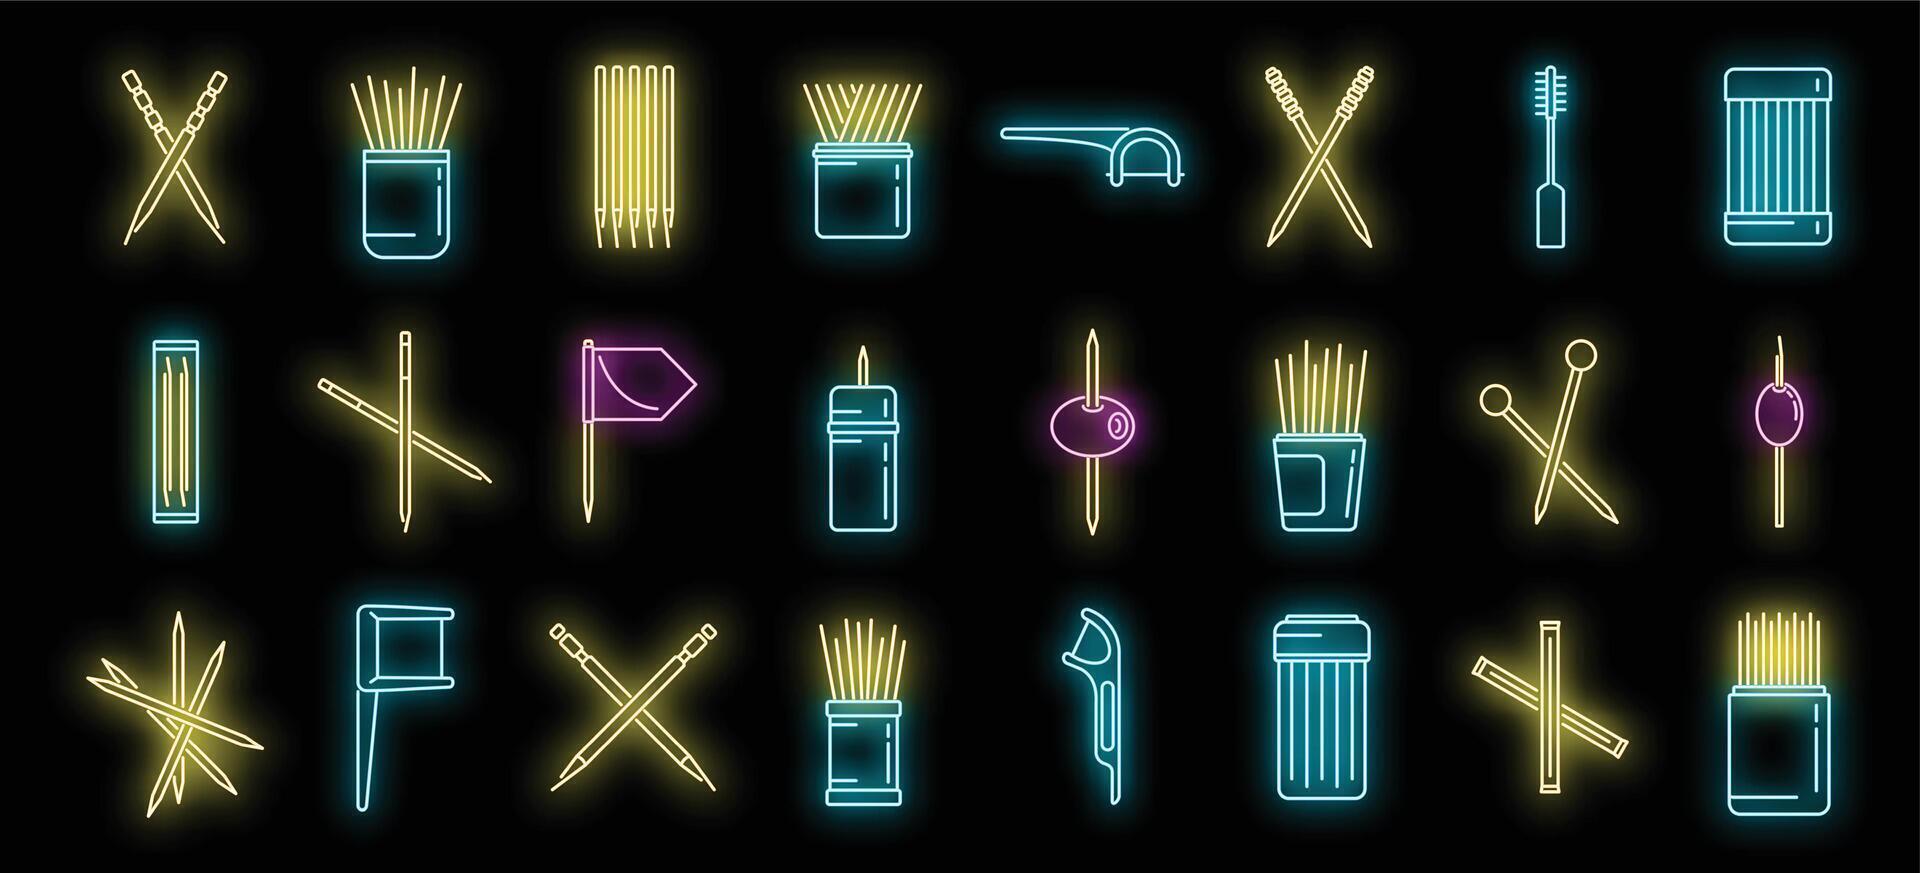 Toothpick icons set vector neon